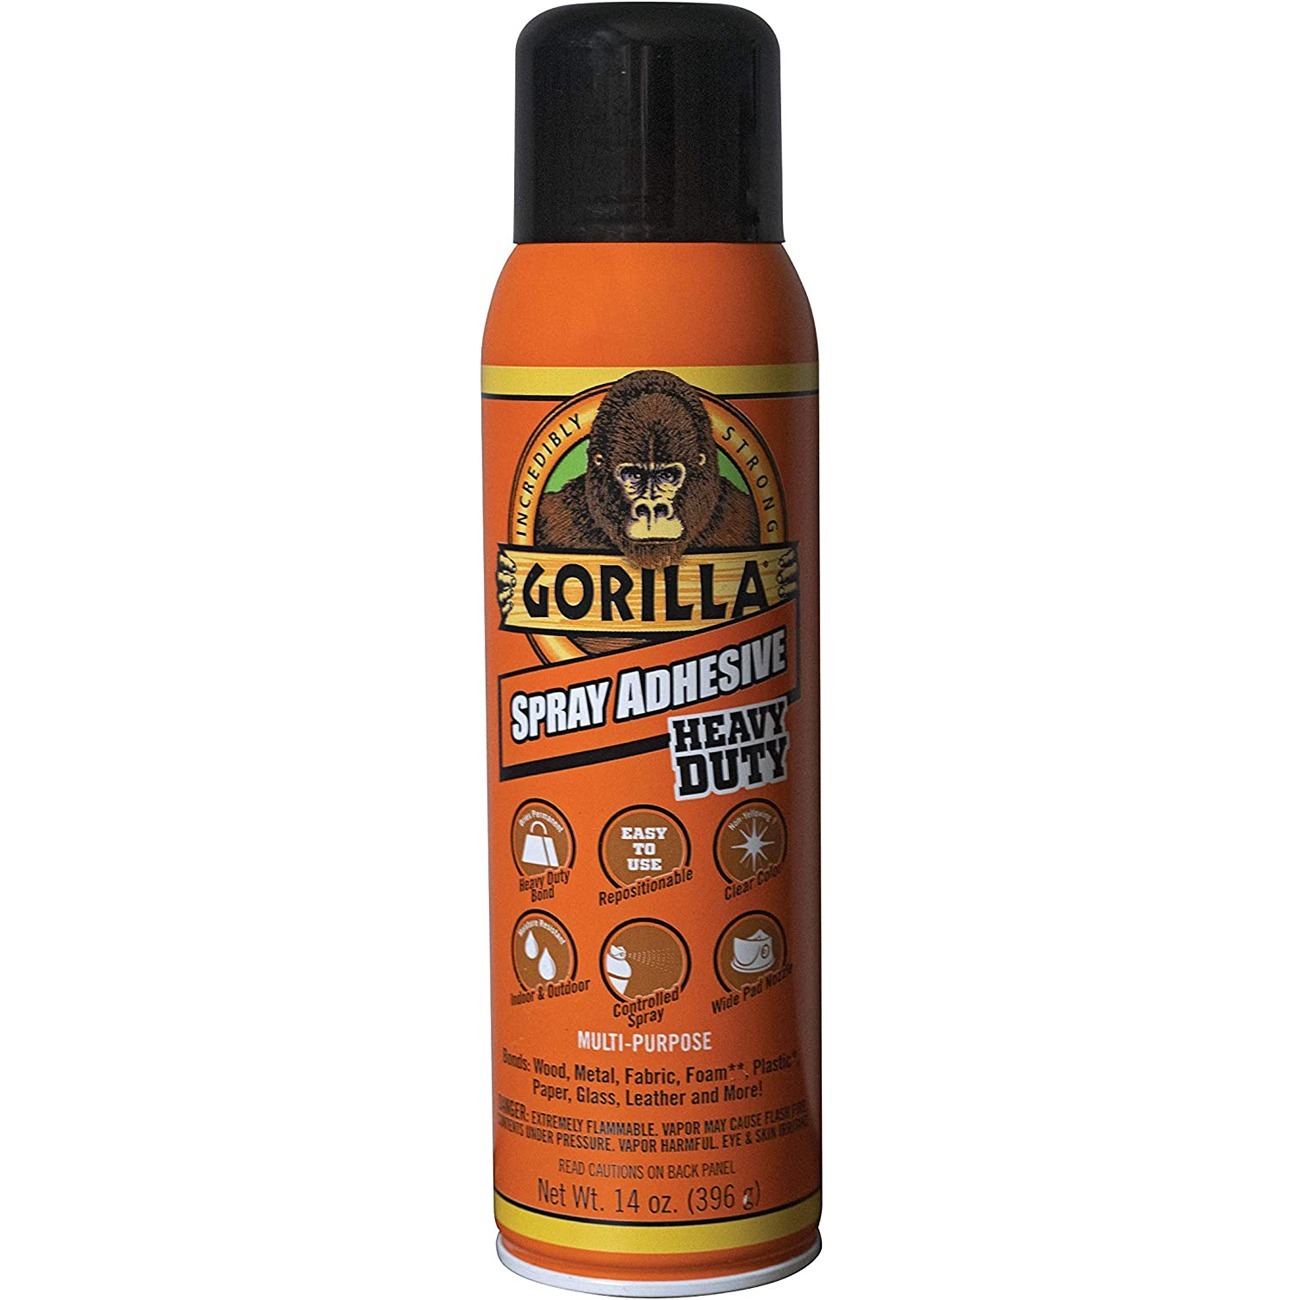 The Gorilla Glue Company - Our most durable wood glue formula